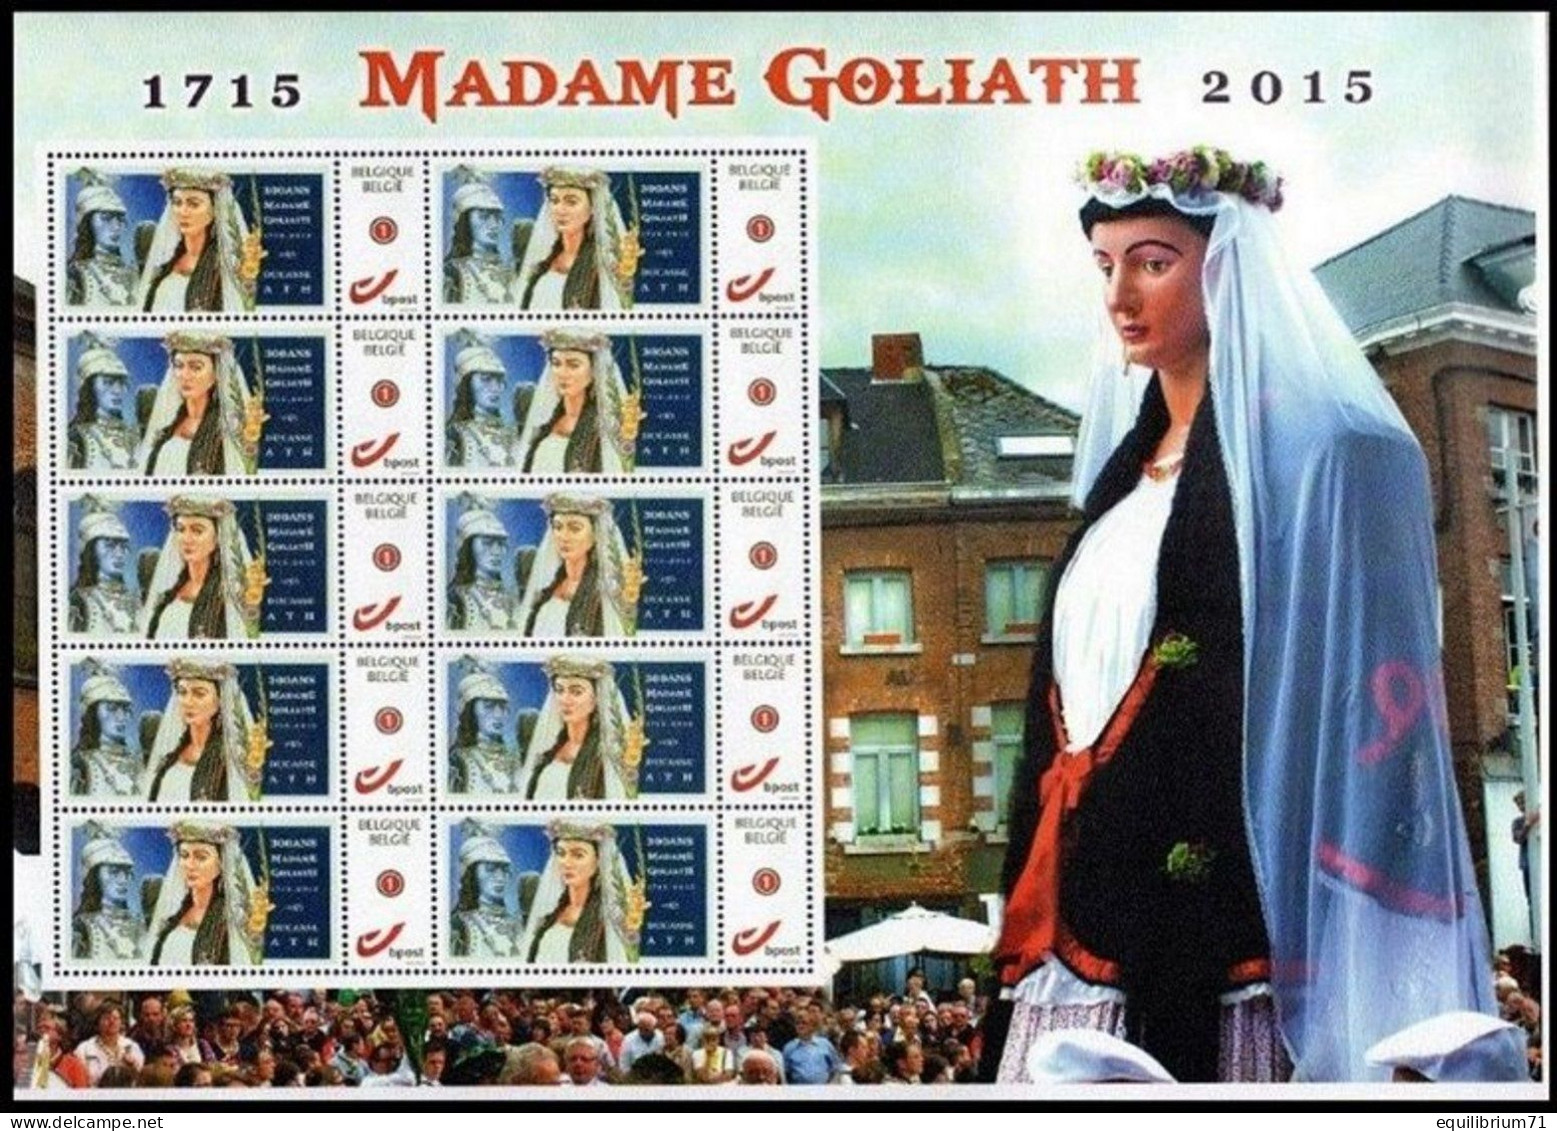 DUOSTAMP** / MYSTAMP** - Ath - 1715/2015 - Madame Goliath - Carnaval